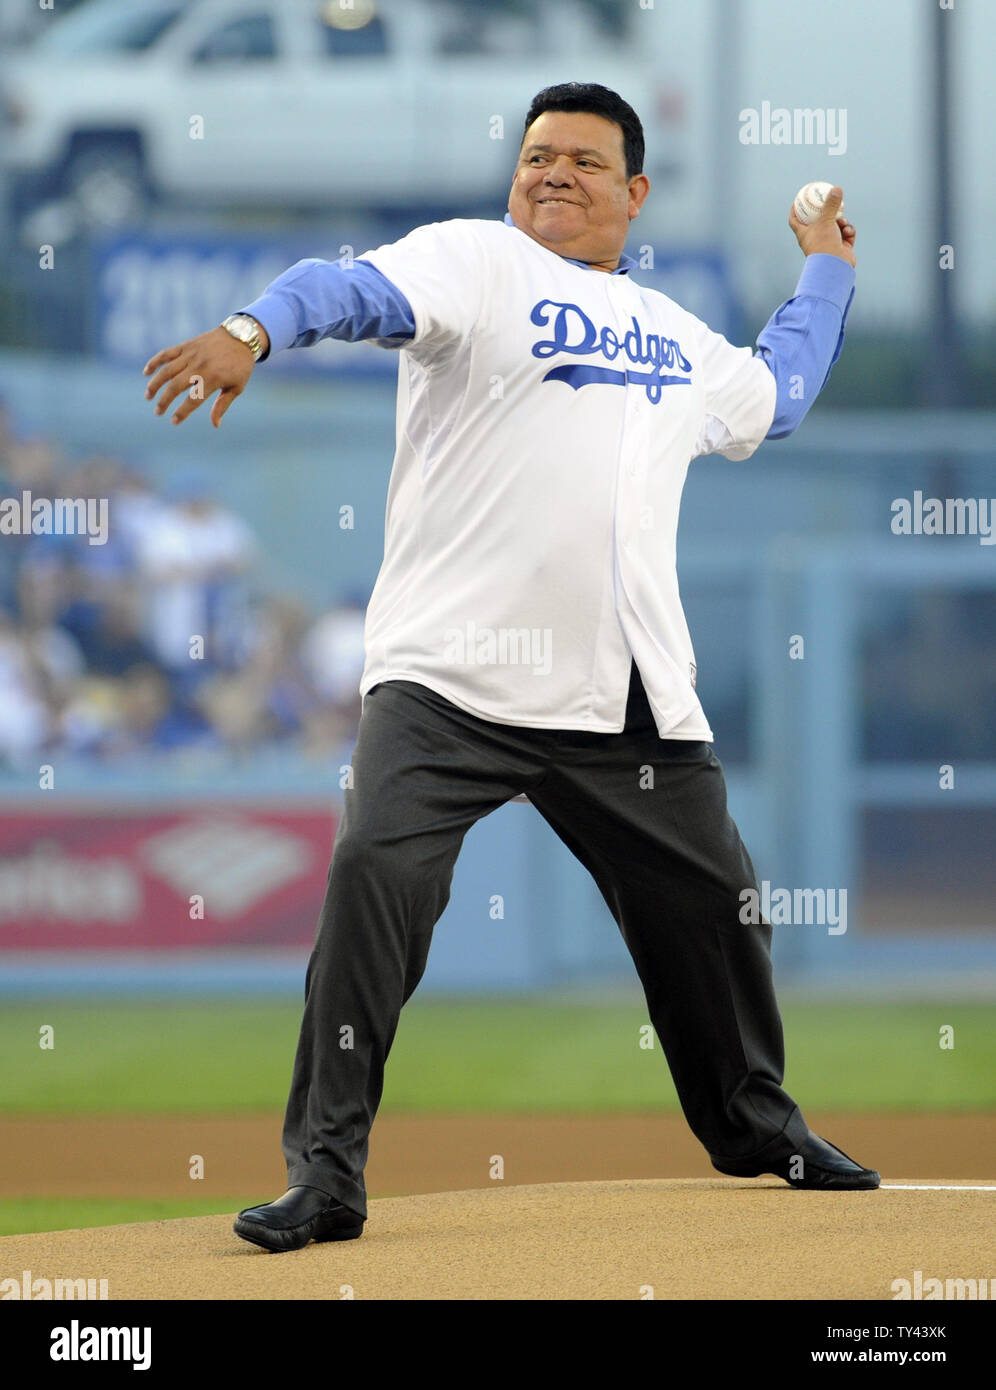 Fernando Valenzuela, Dodgers legend, was appointment viewing